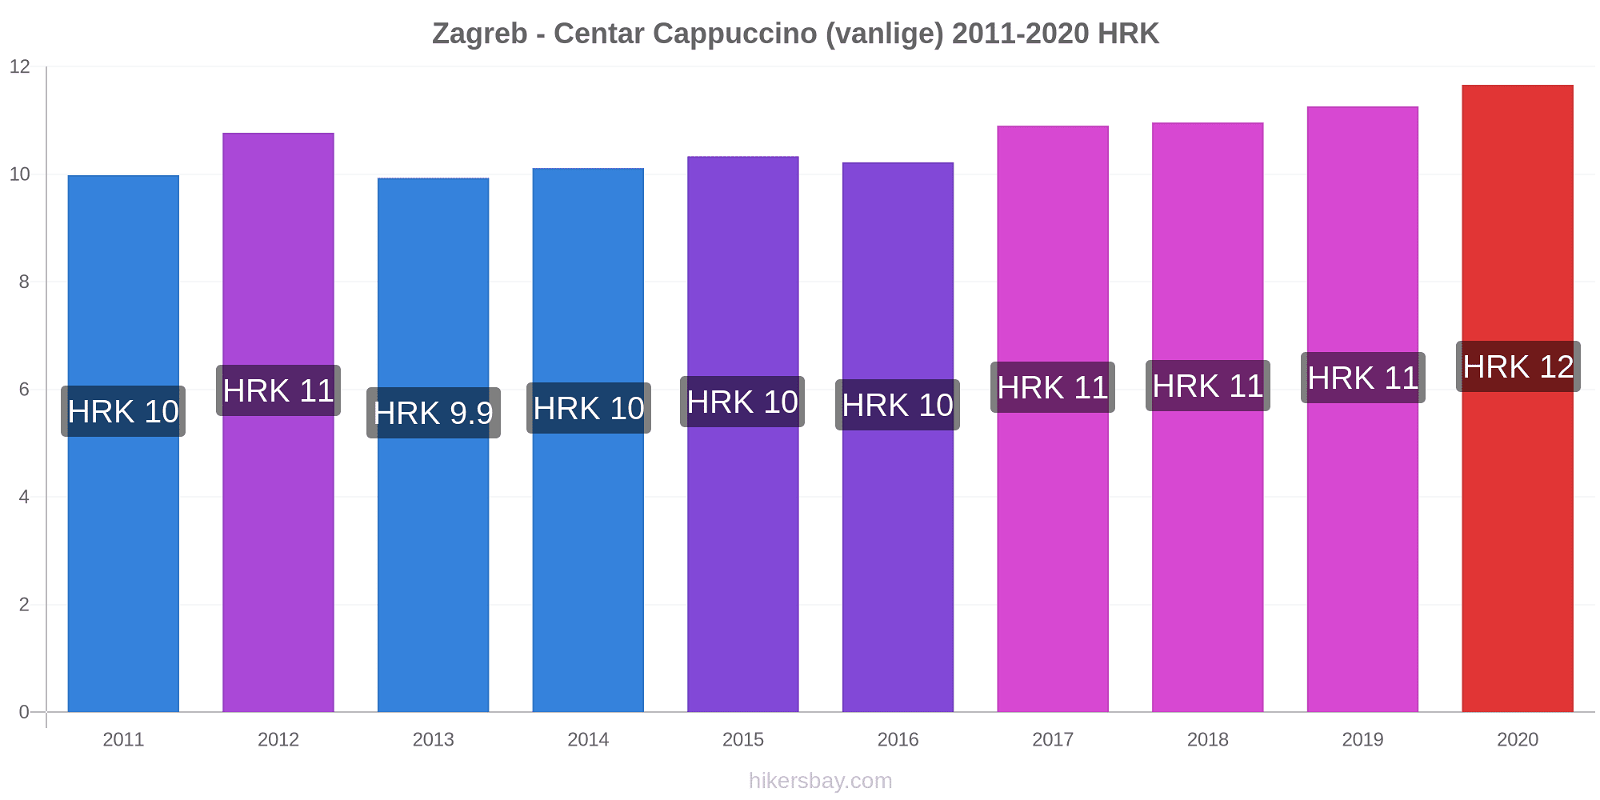 Zagreb - Centar prisendringer Cappuccino (vanlige) hikersbay.com